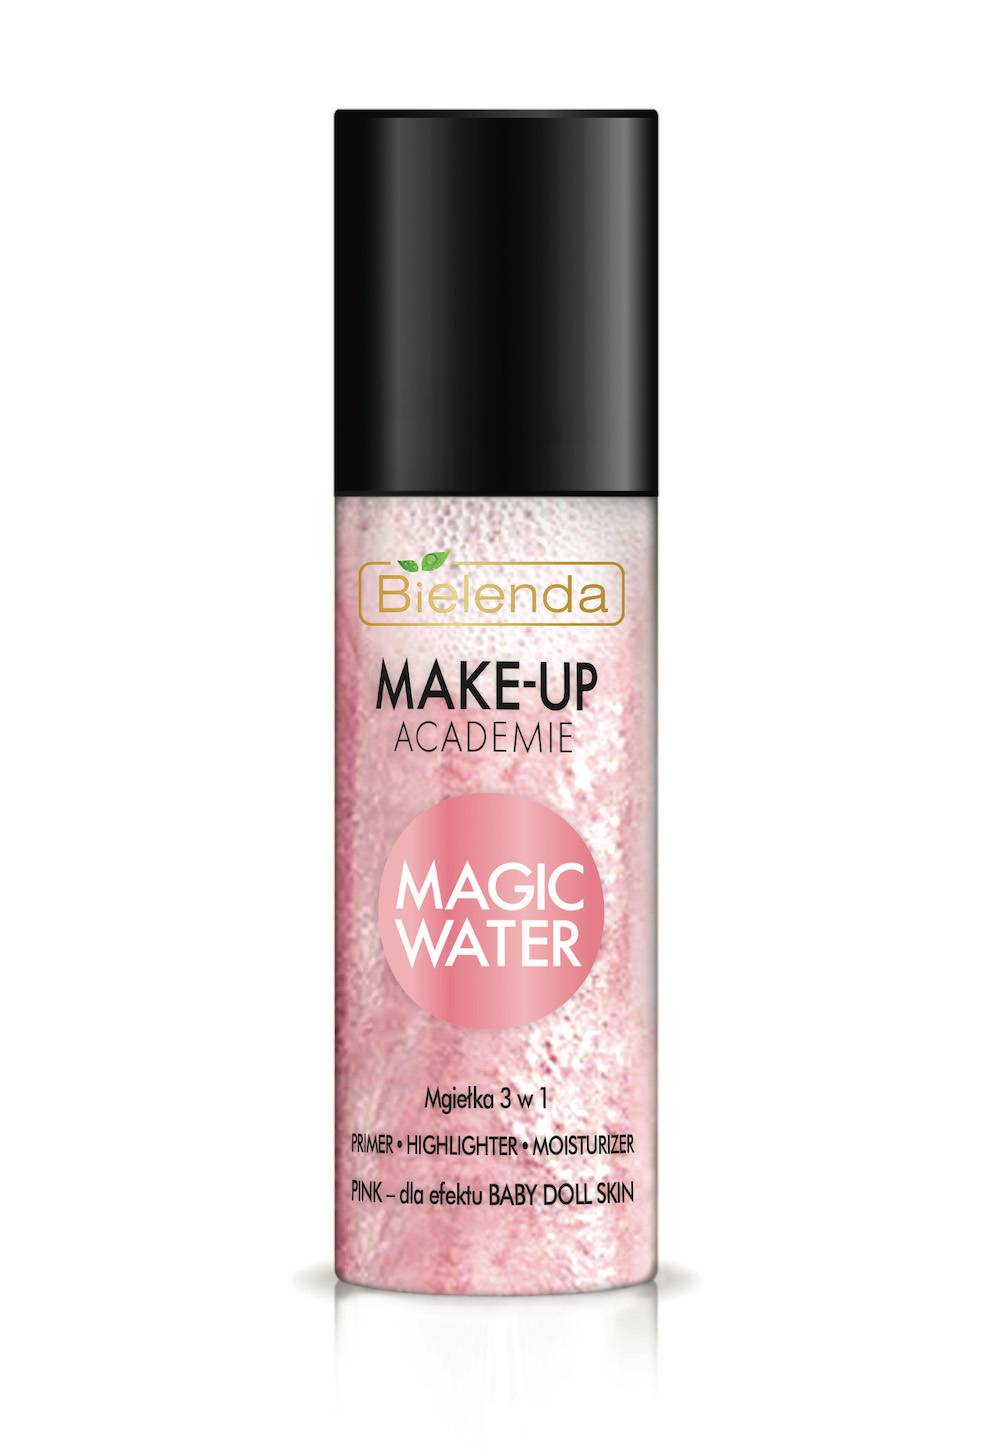 Make-Up Academie Magic Water Bielenda (Fot. materiały prasowe)